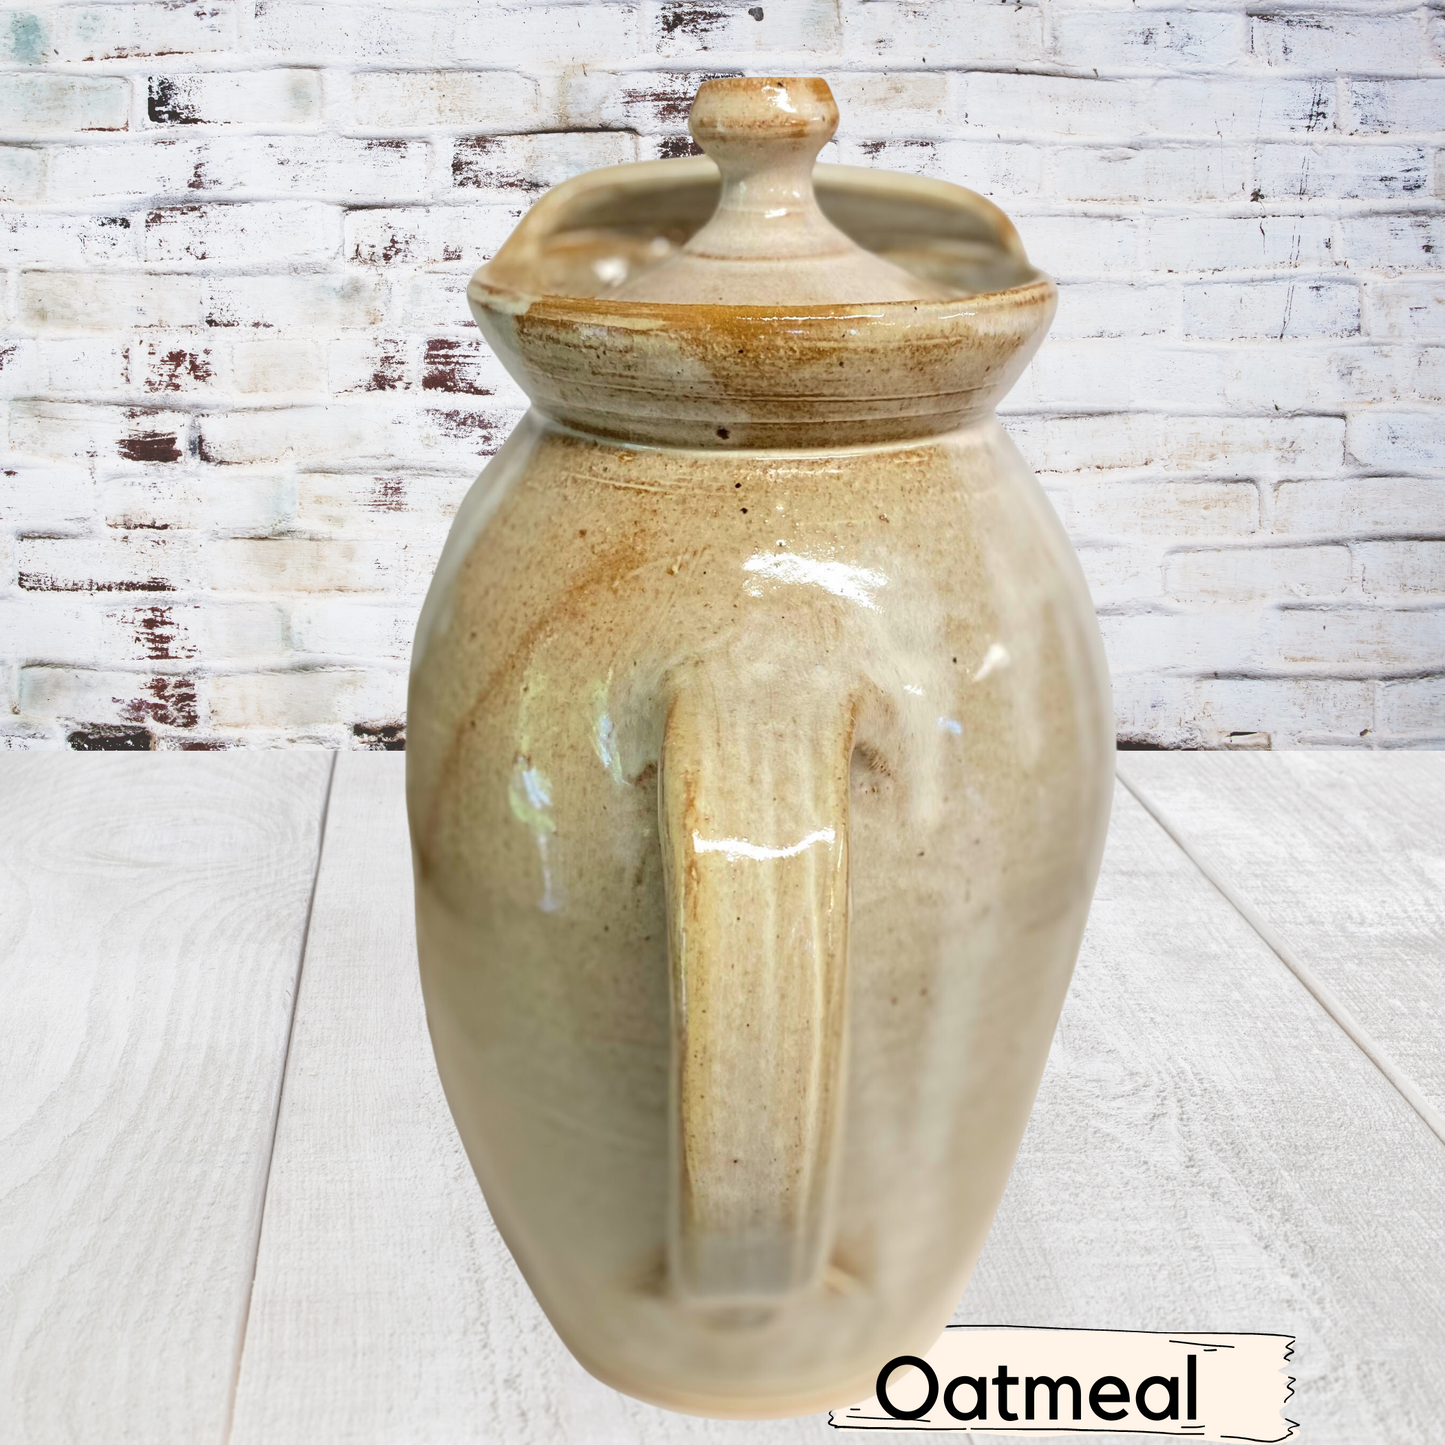 Large pitcher with lid tea, coffee, serving. Steep tea pottery handmade ceramic teapot